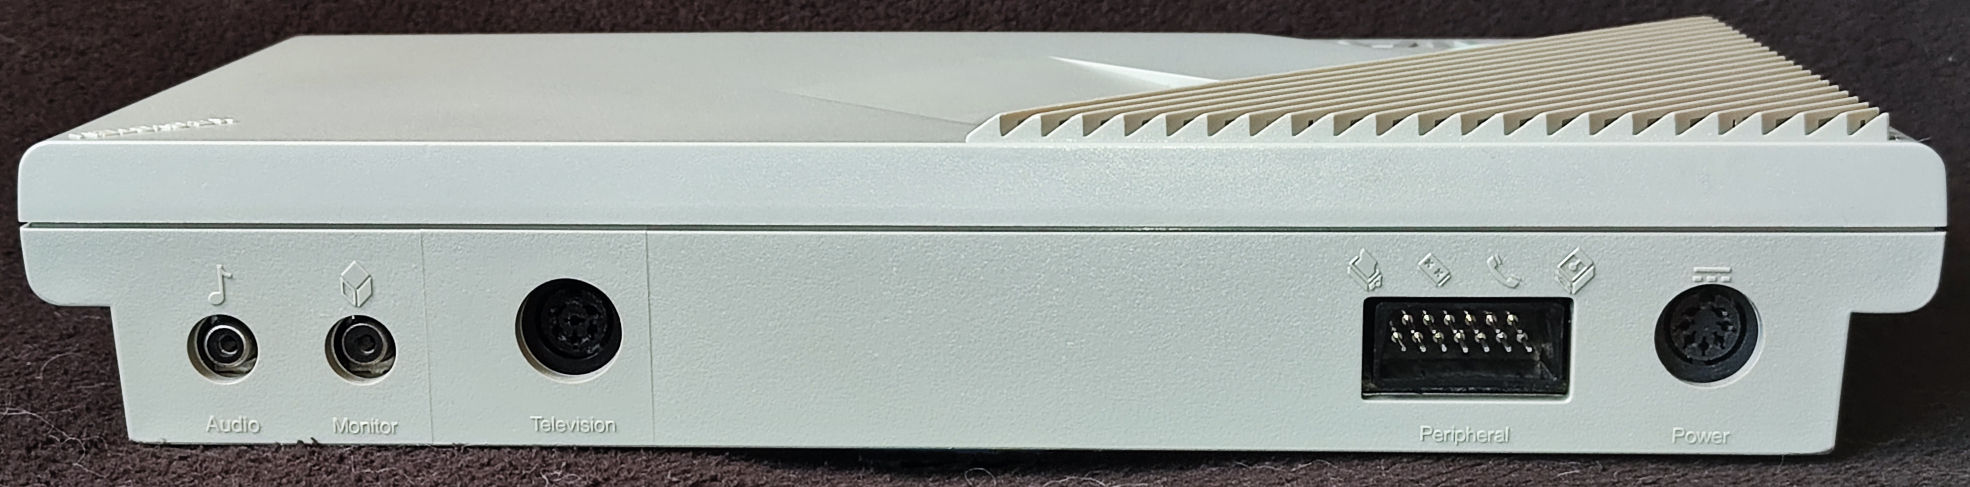 L’Atari XE System en 2023 Secam_10